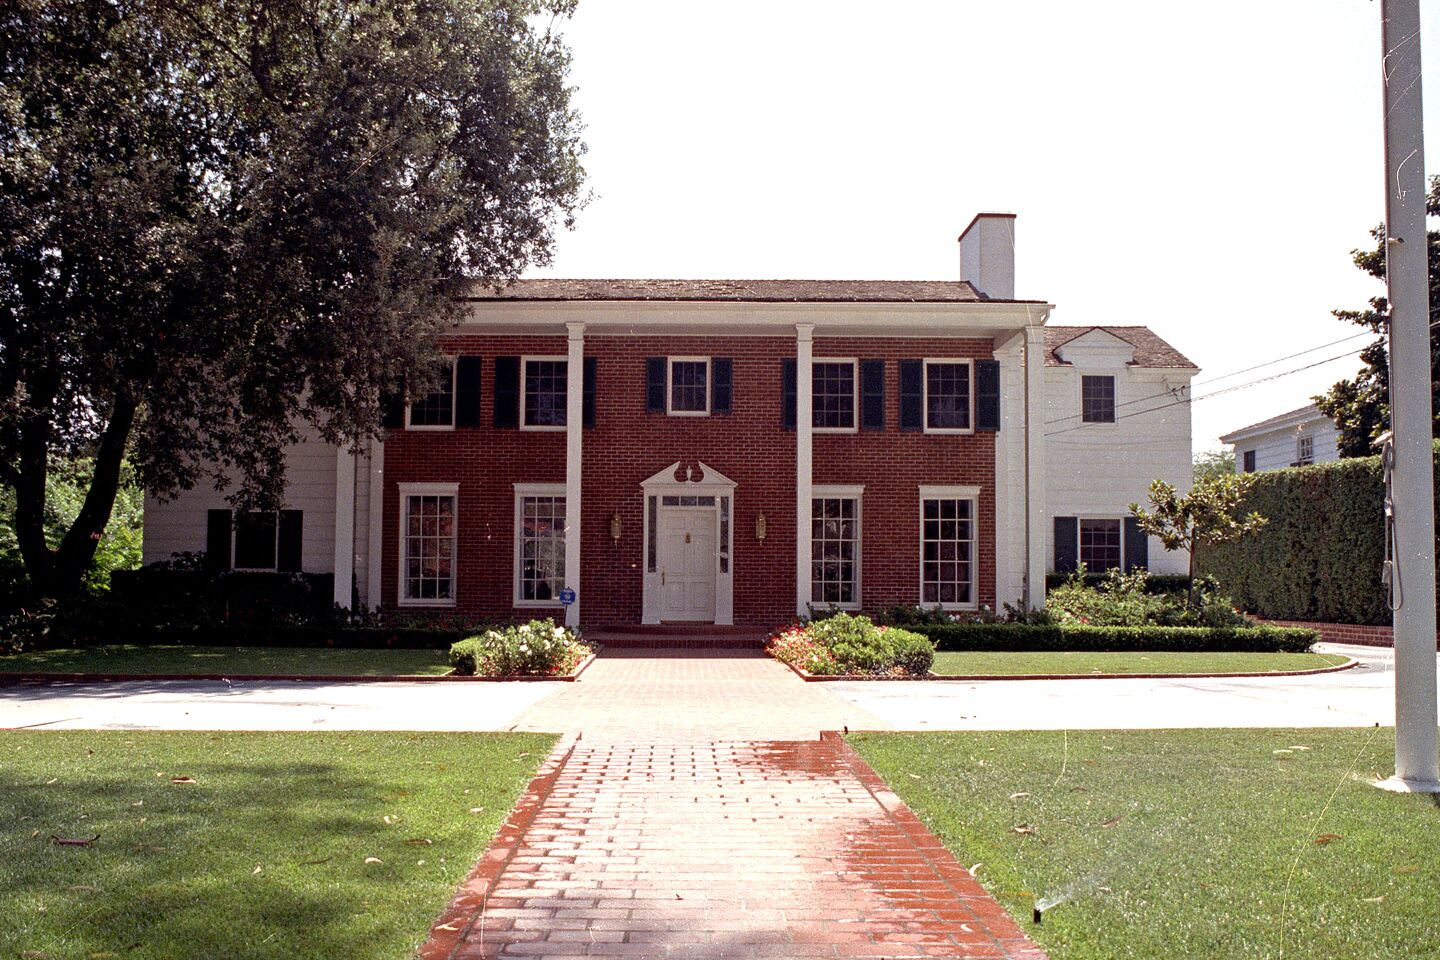 Daniel and Linda Broderick's house on Aug. 17, 1990.